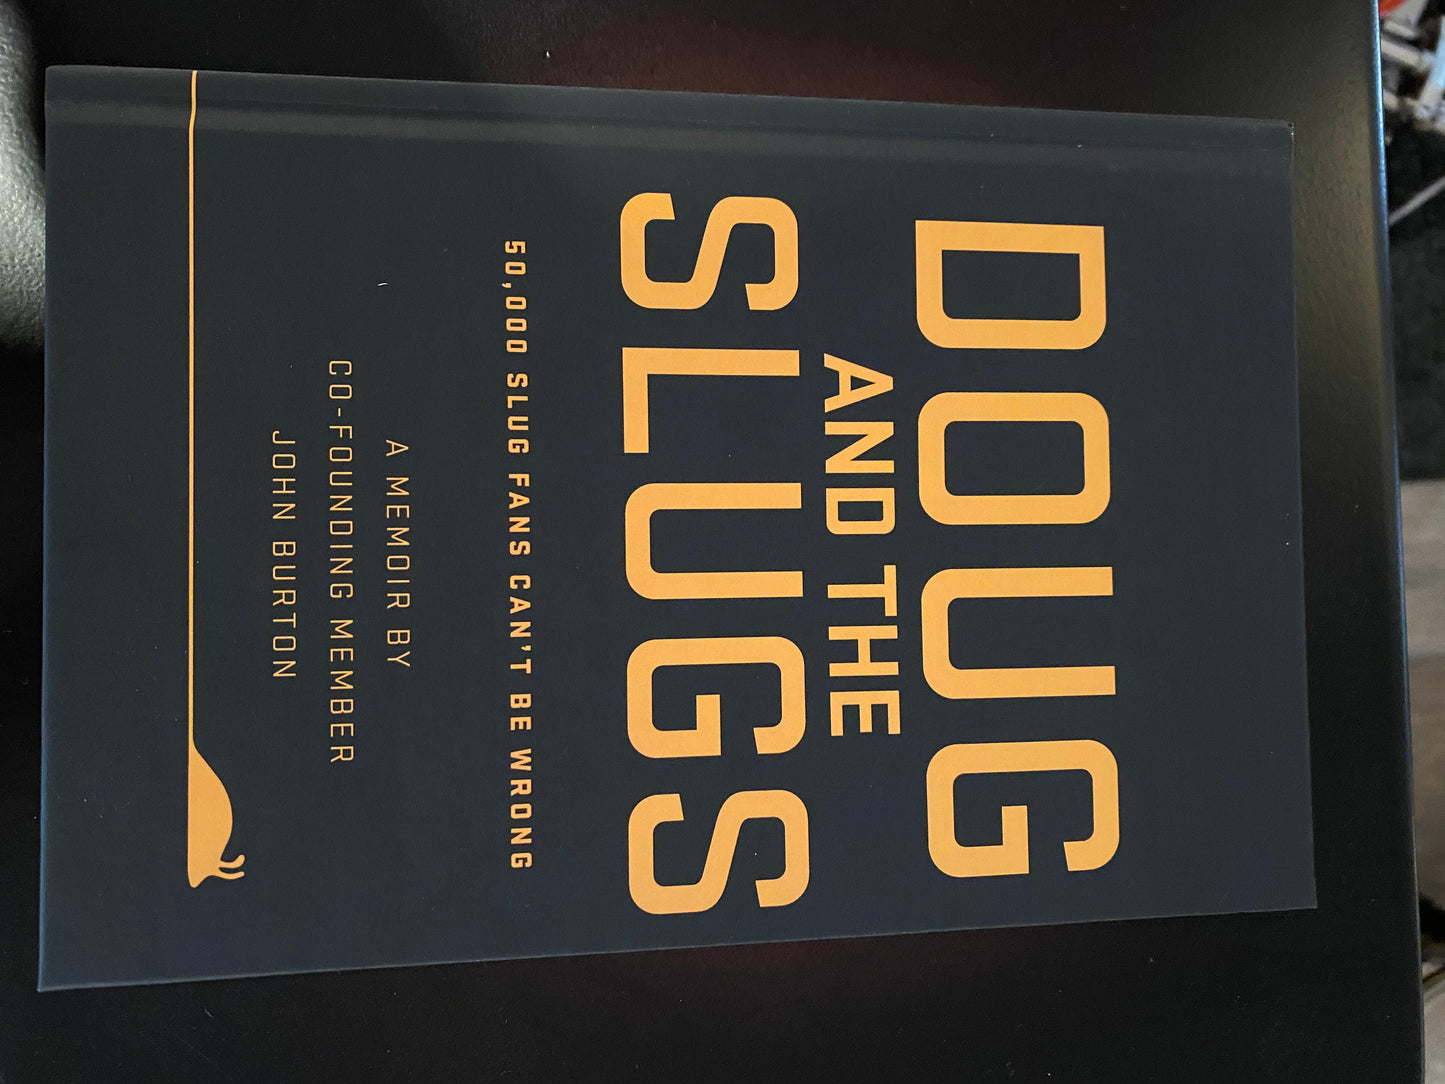 Doug & the Slugs Hard Cover Memoir - John Burton